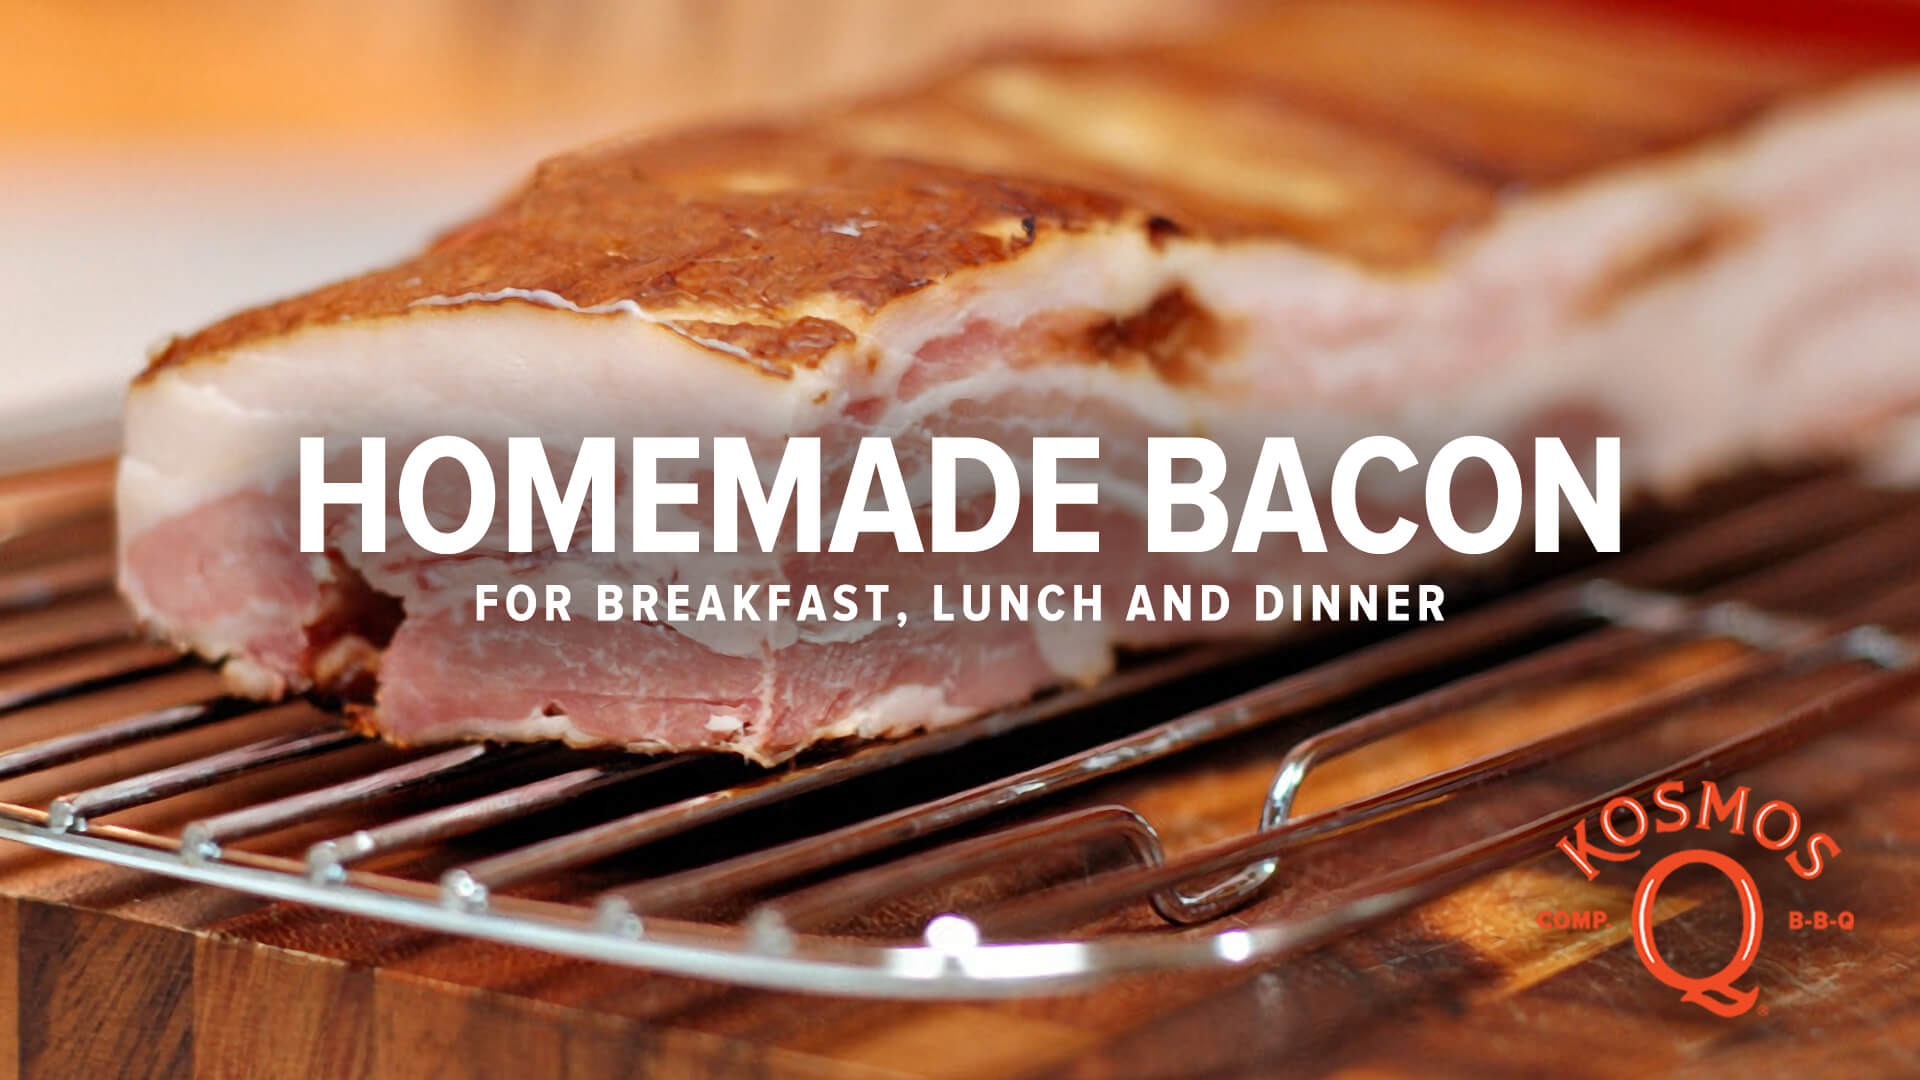 Homemade Bacon from Pork Belly